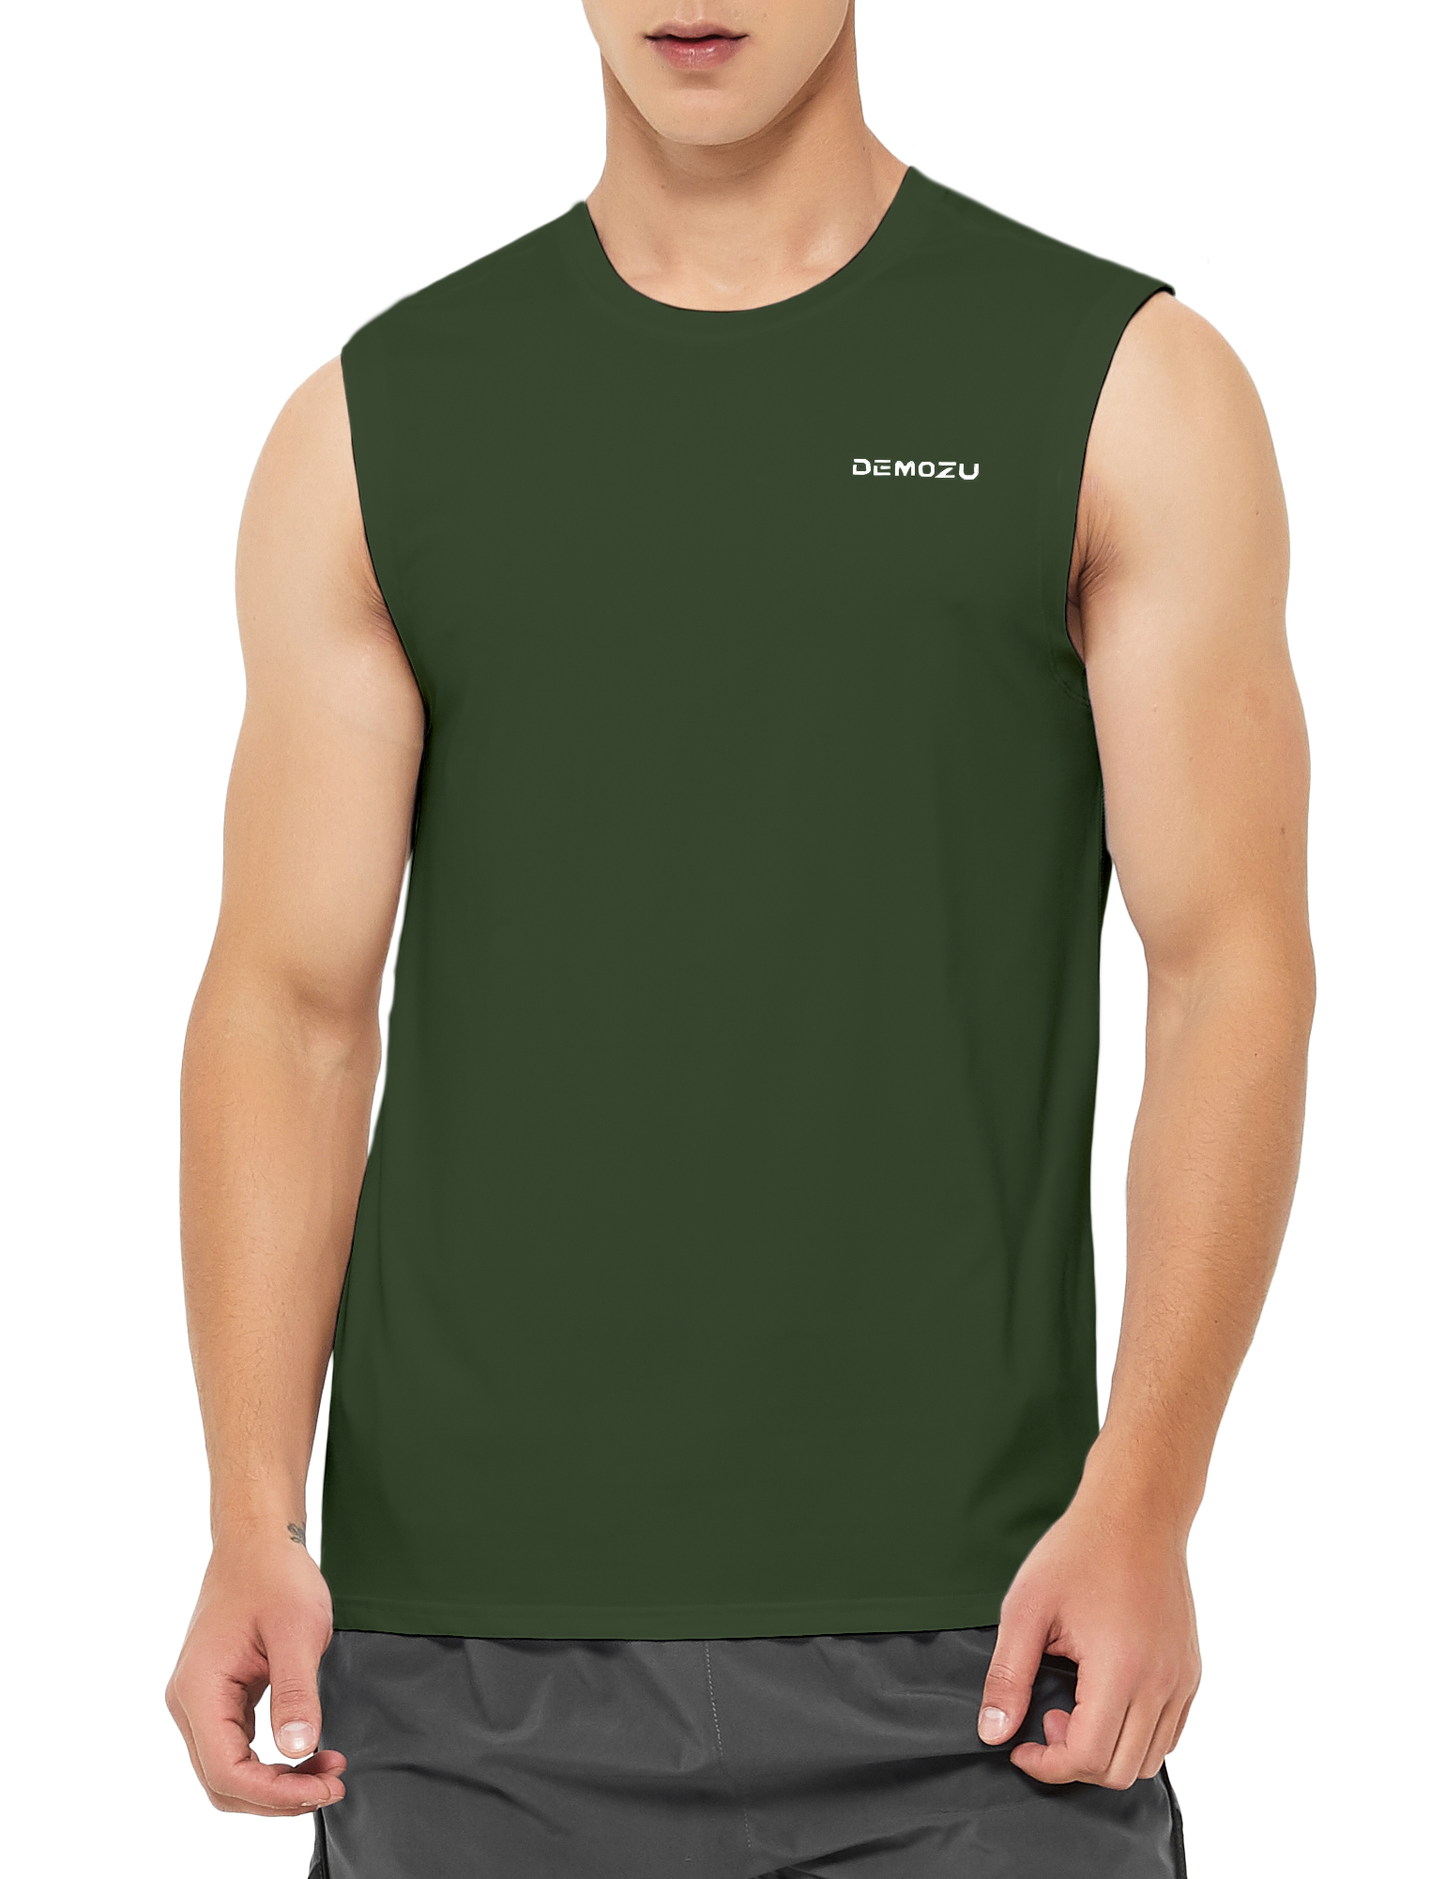 mens sleeveless workout swim shirts olive green